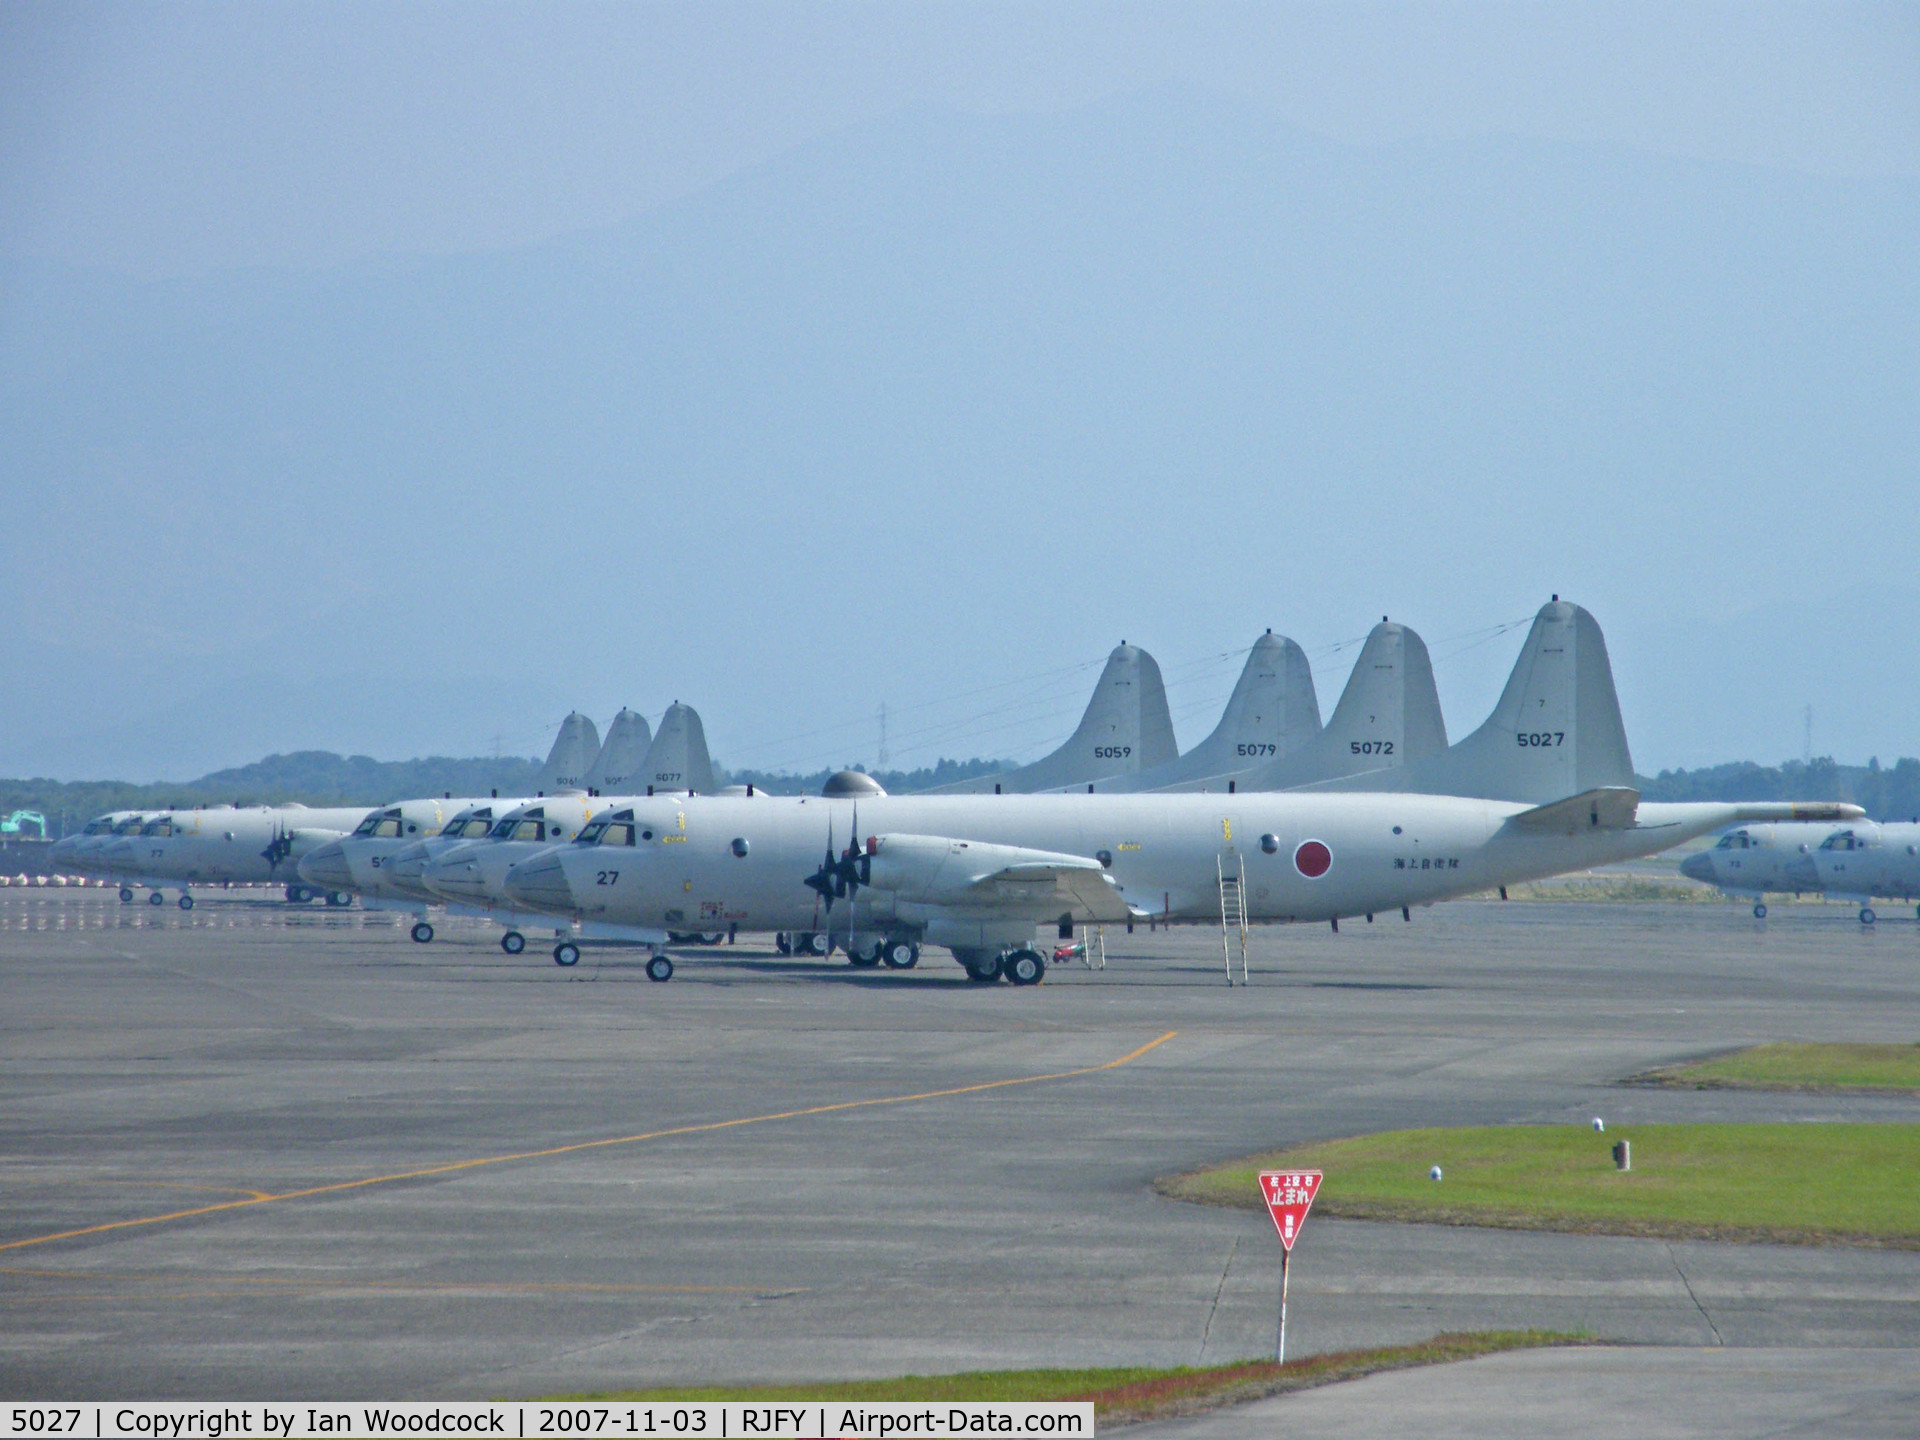 5027, Lockheed P-3C Orion C/N 9024, Lockheed P-3C/Kanoya AB (heads a line of P-3's on the ramp)